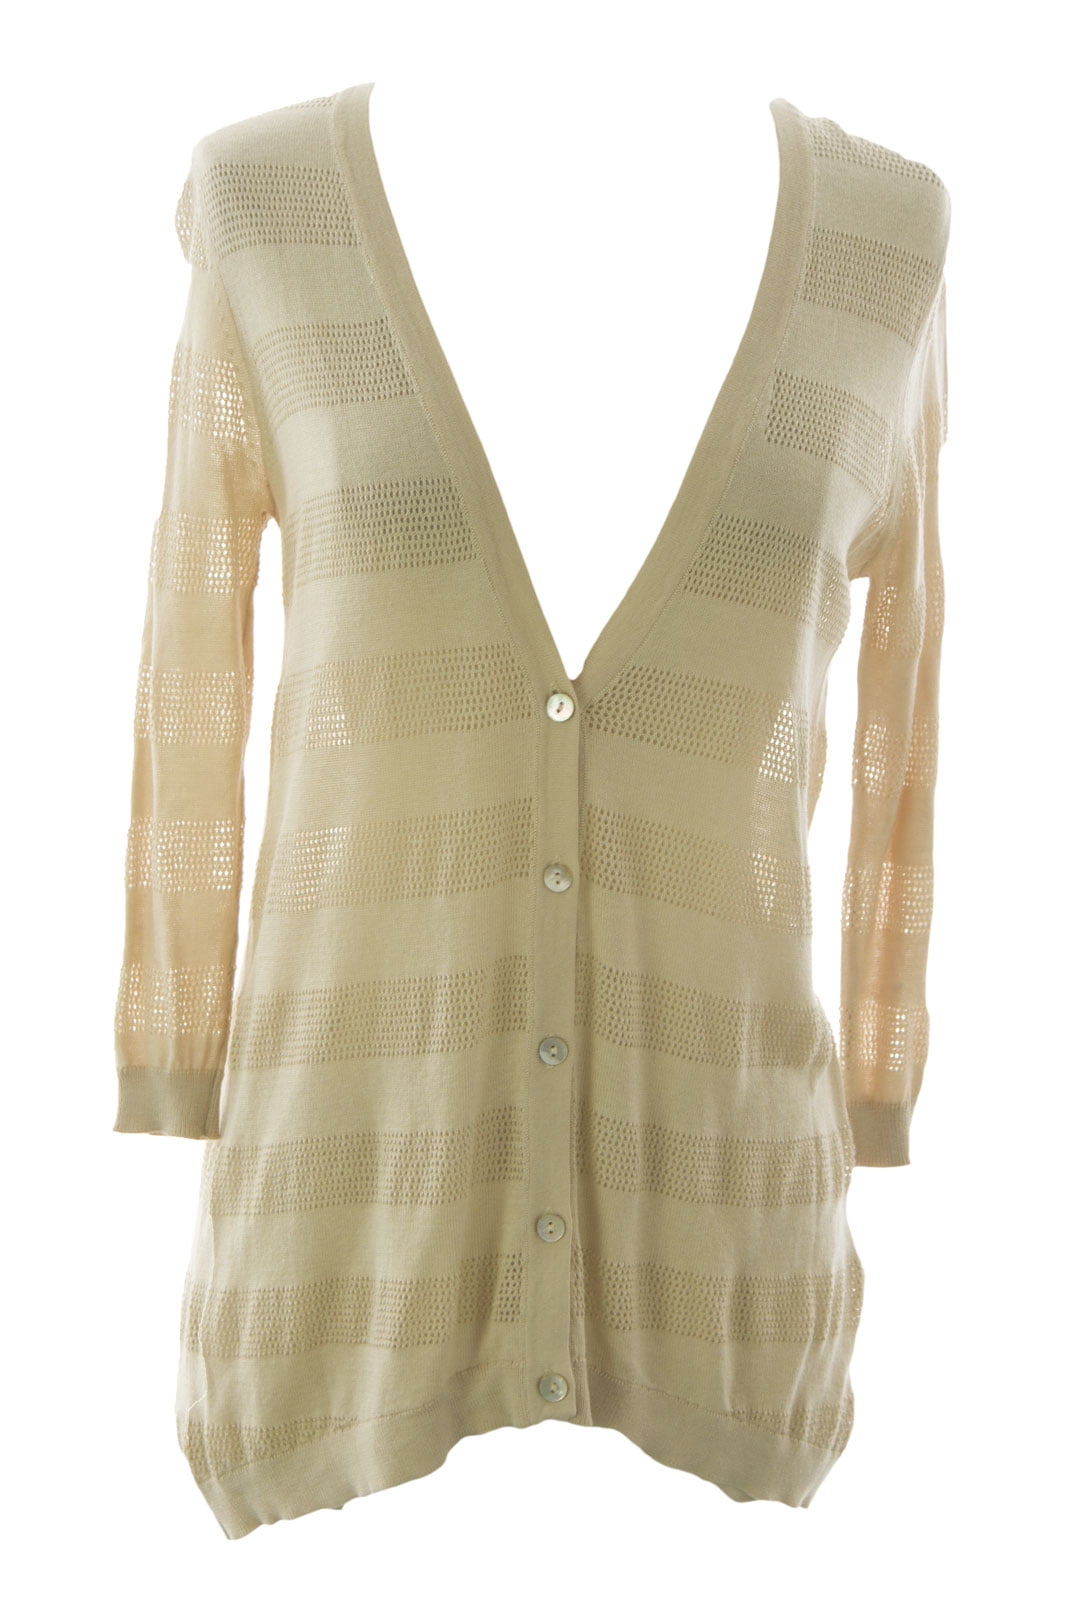 August Silk Women's Navy Combo Striped 3/4 Sleeve Sweater S $58 